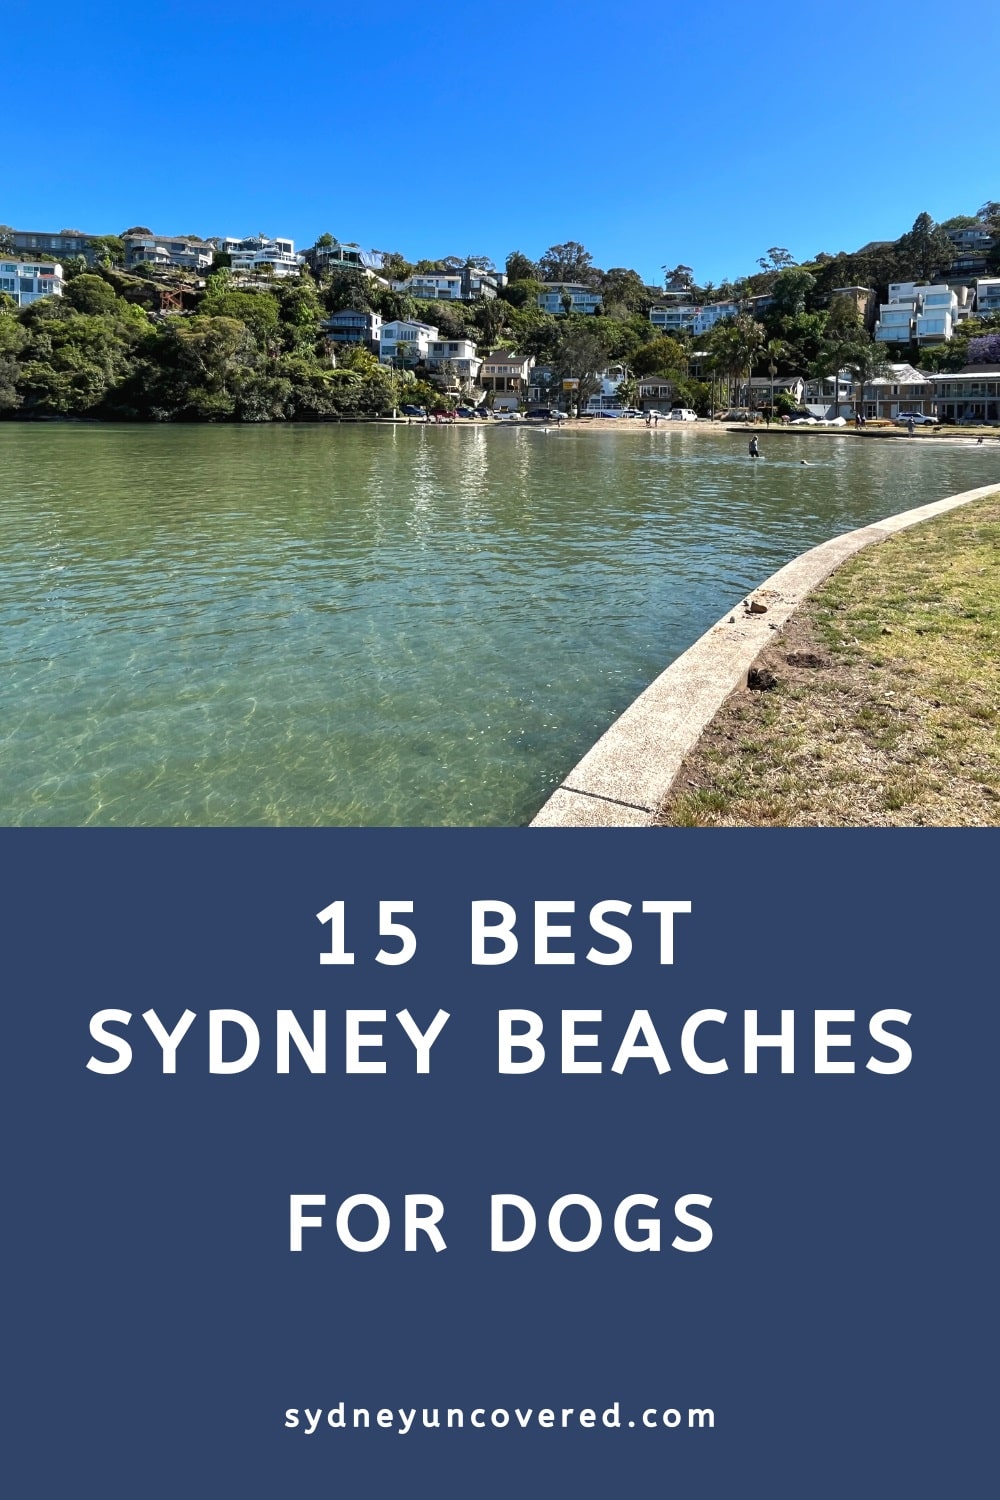 15 Dog friendly Sydney beaches